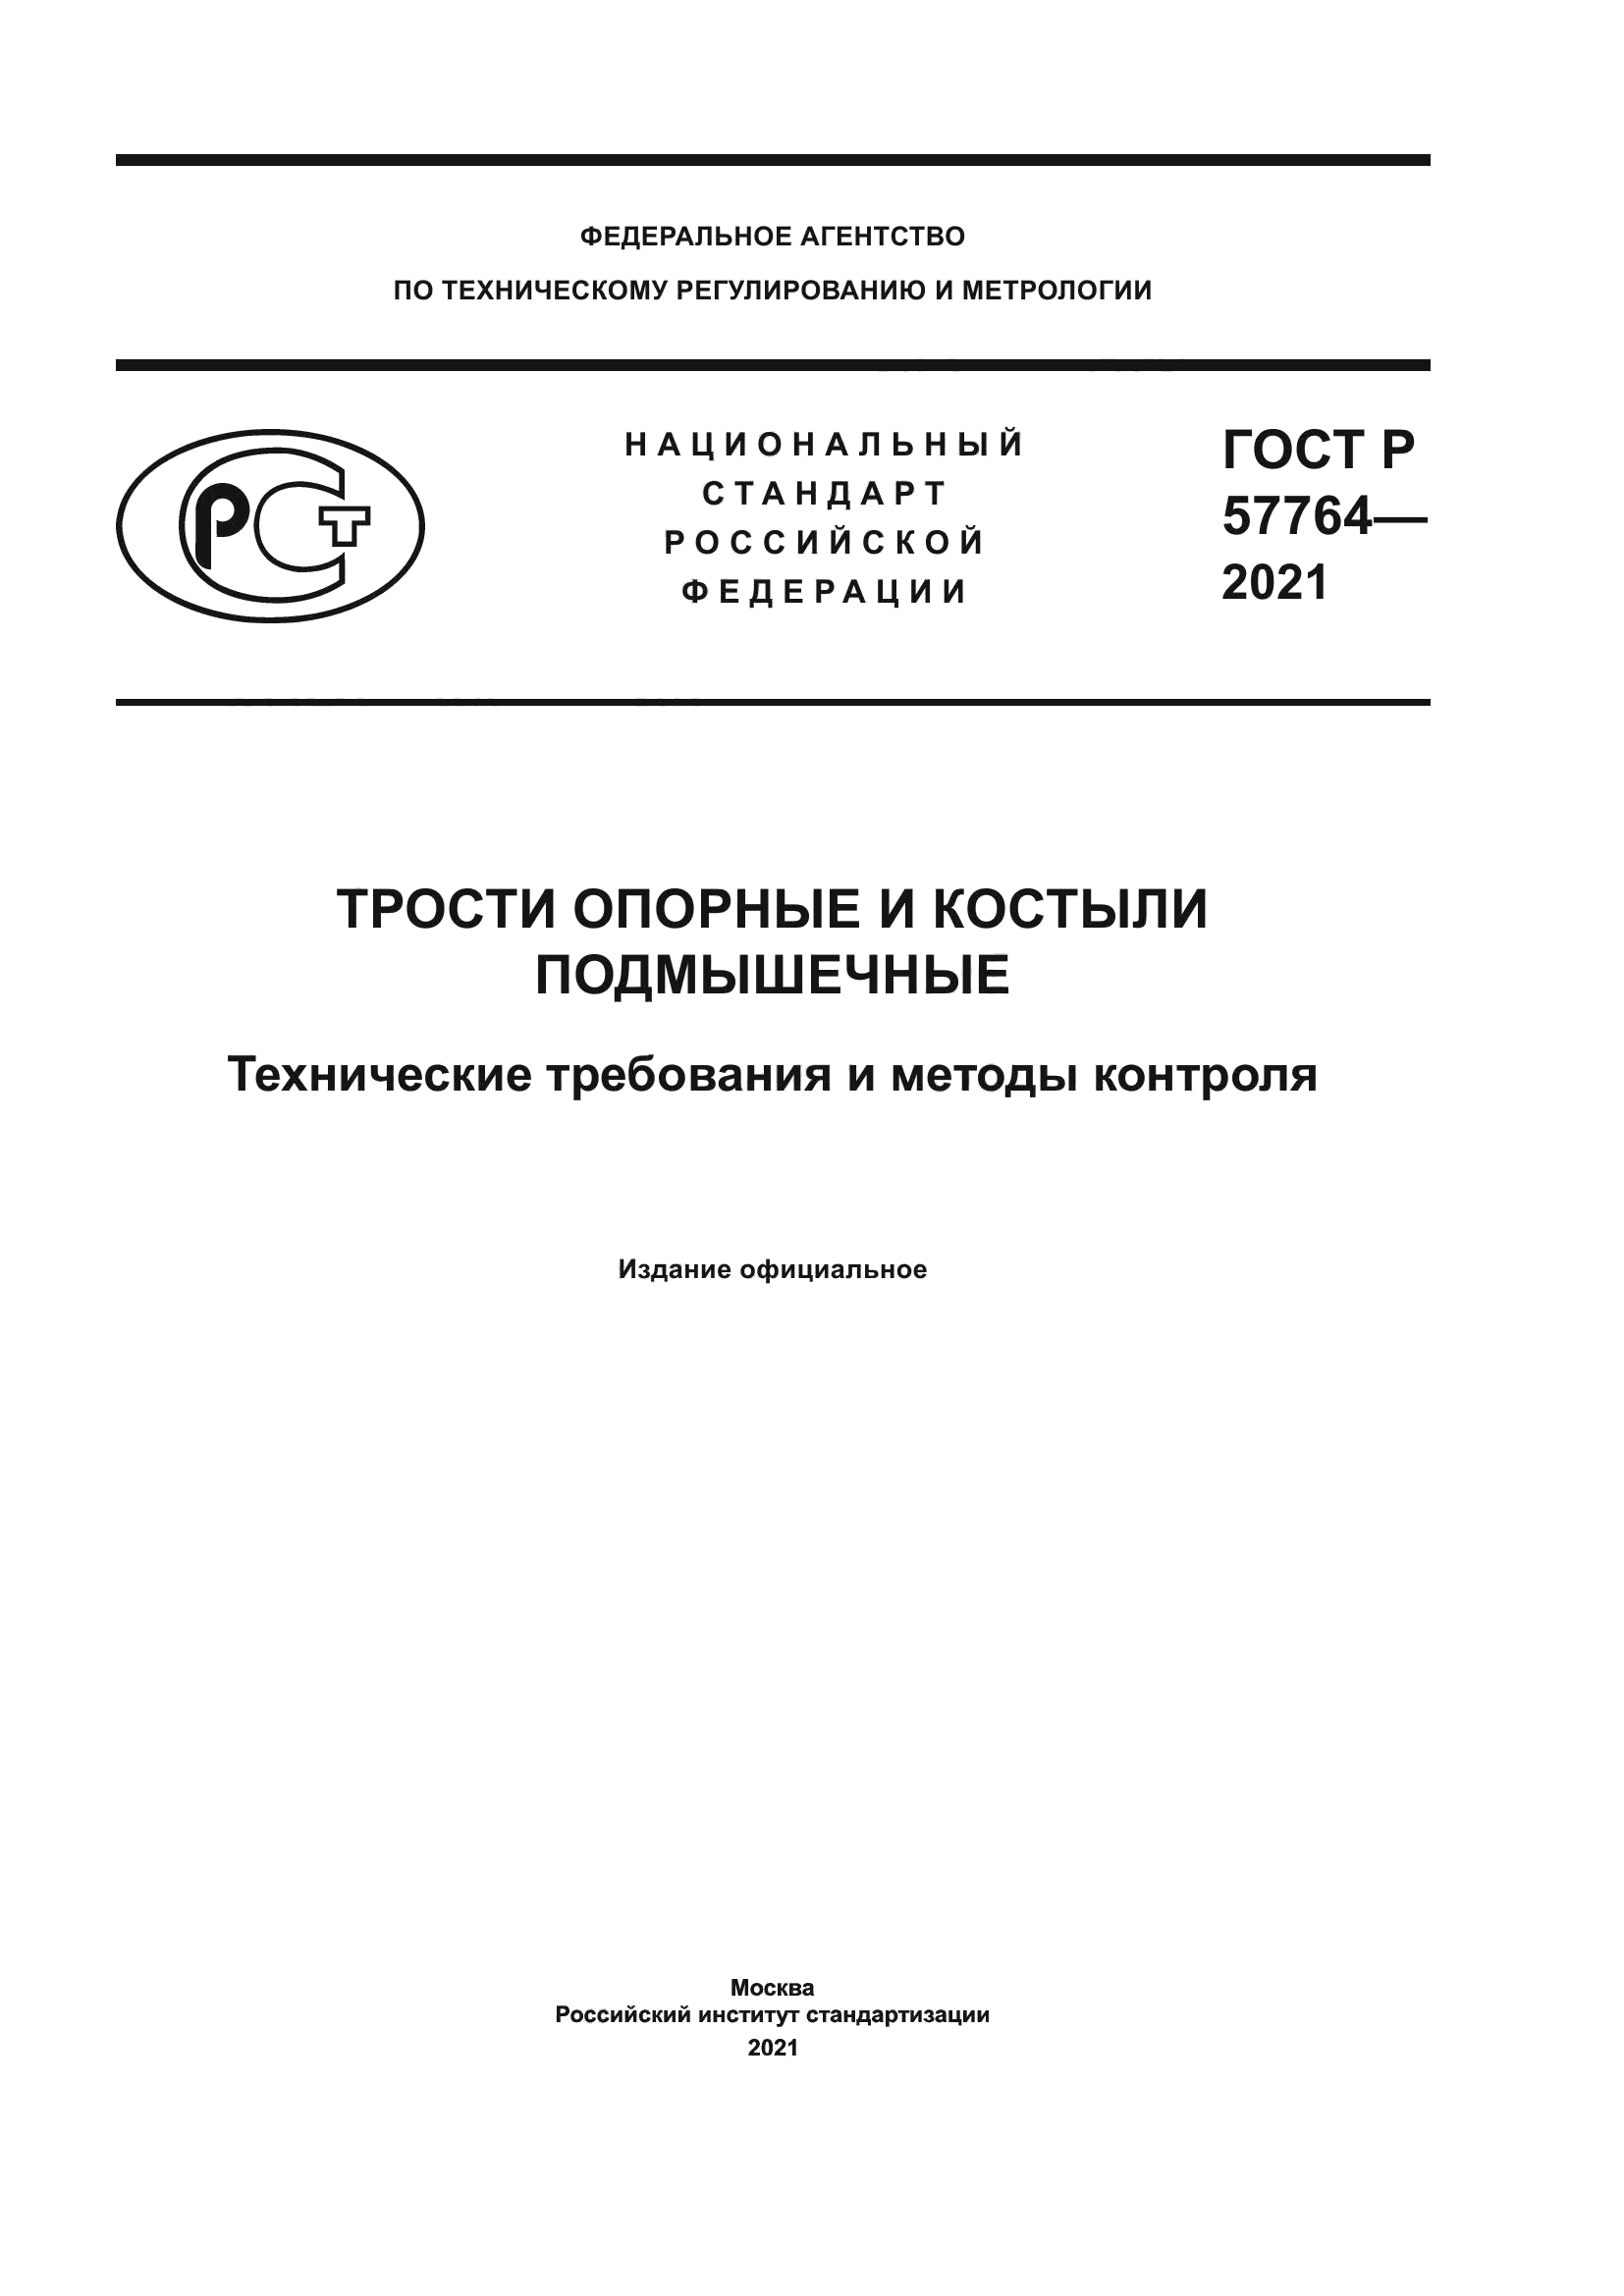 ГОСТ Р 57764-2021